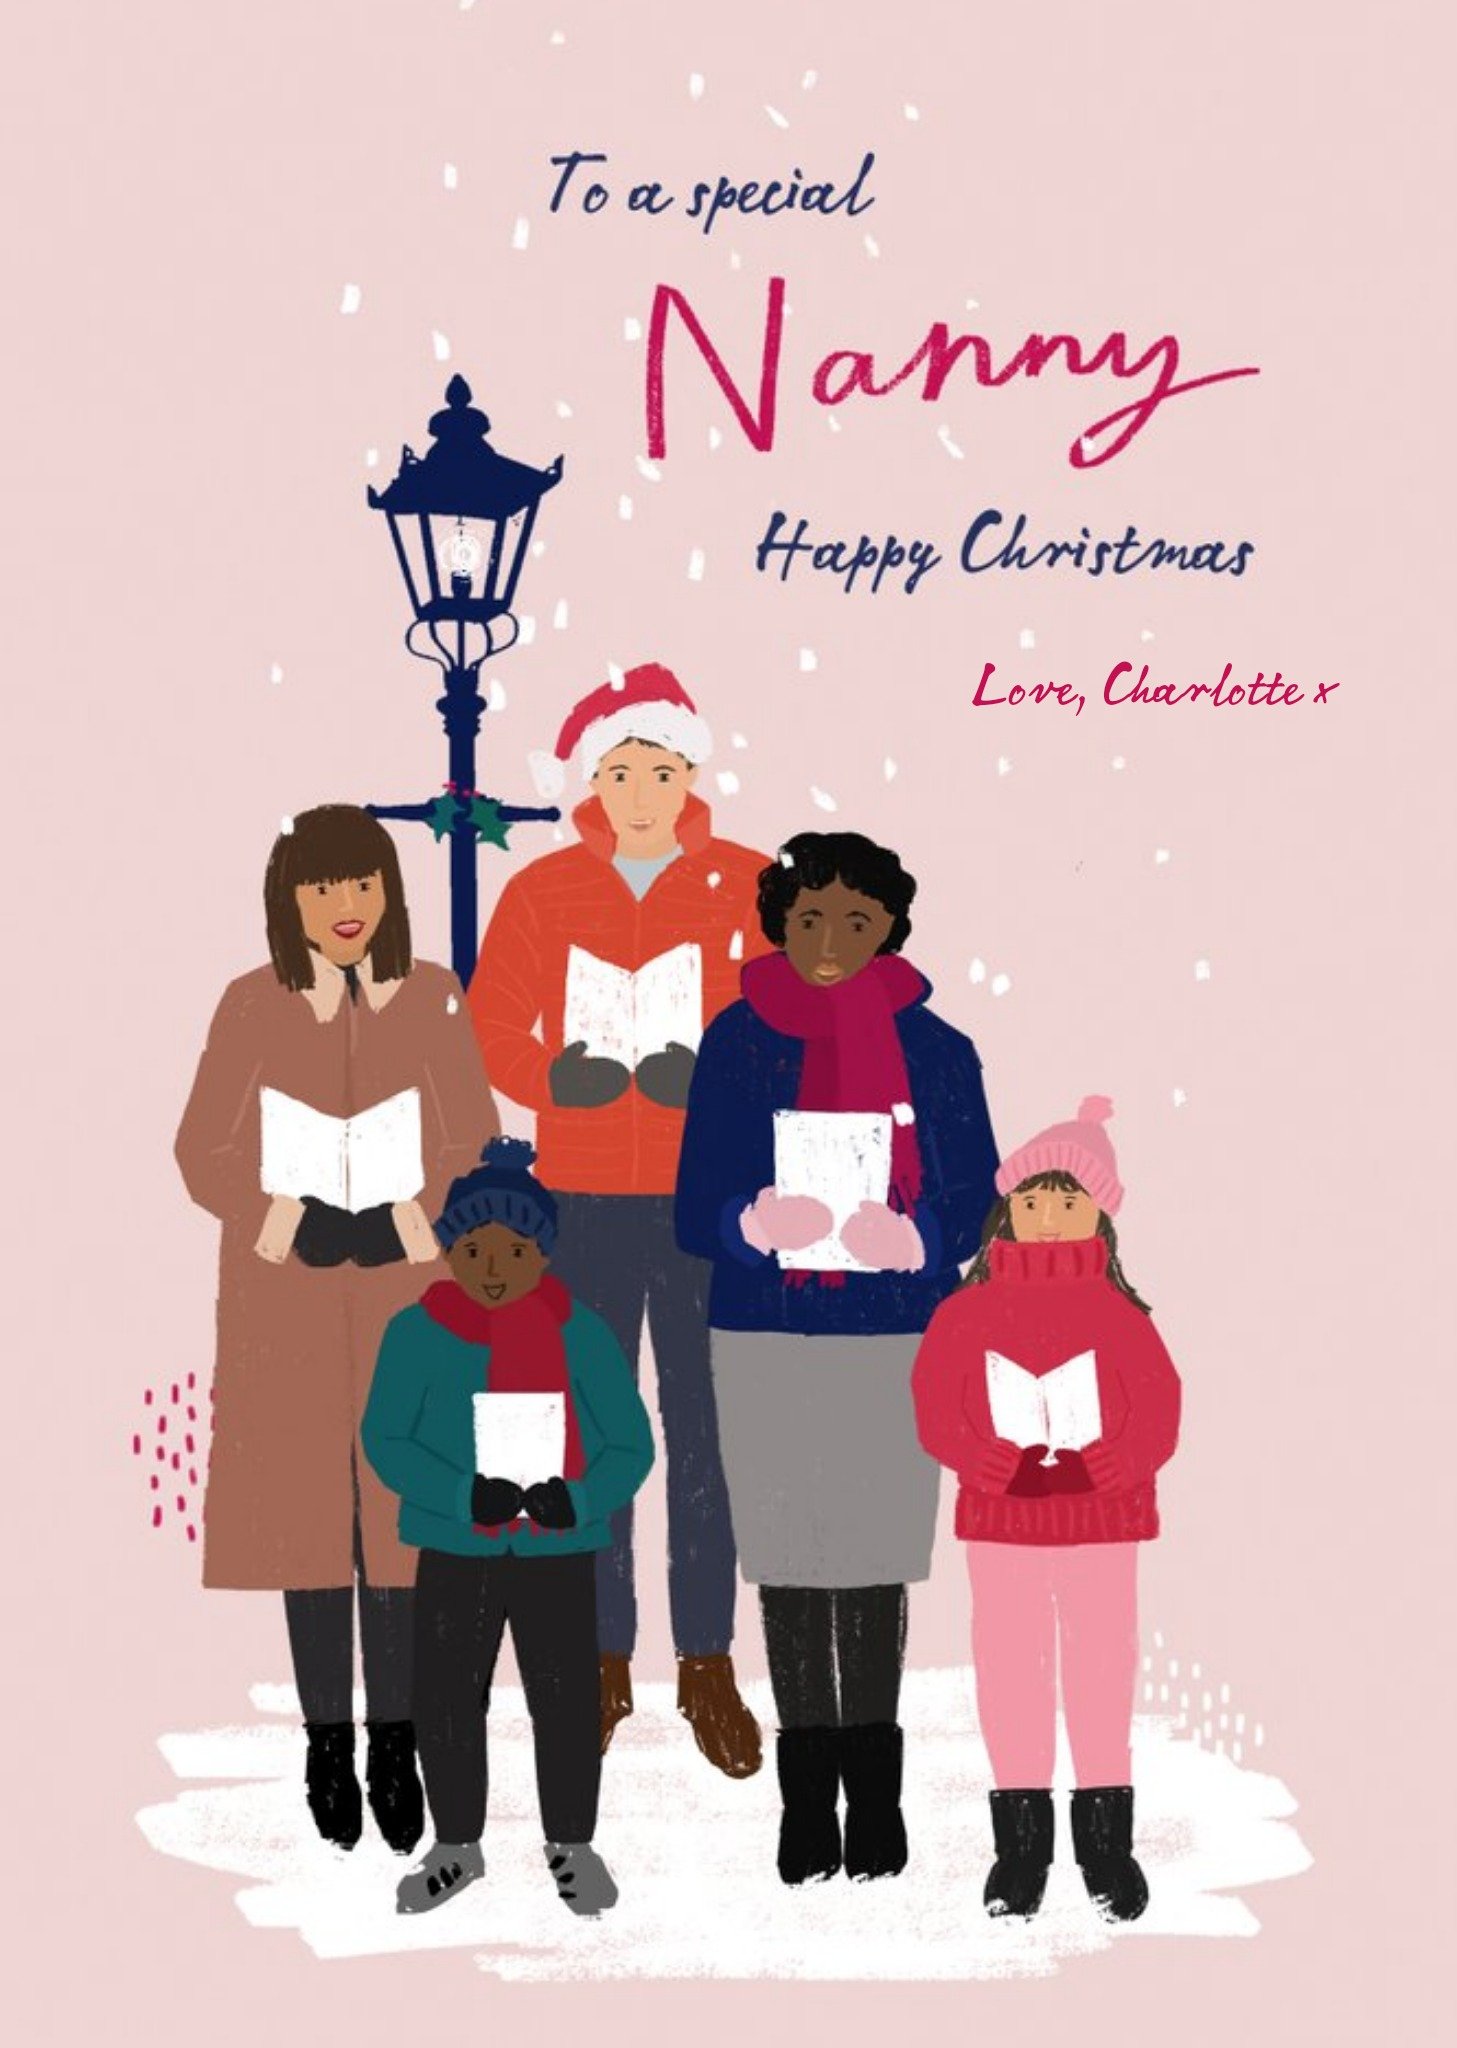 Moonpig Family Singing Christmas Carols For Nanny Chrsitmas Card, Large